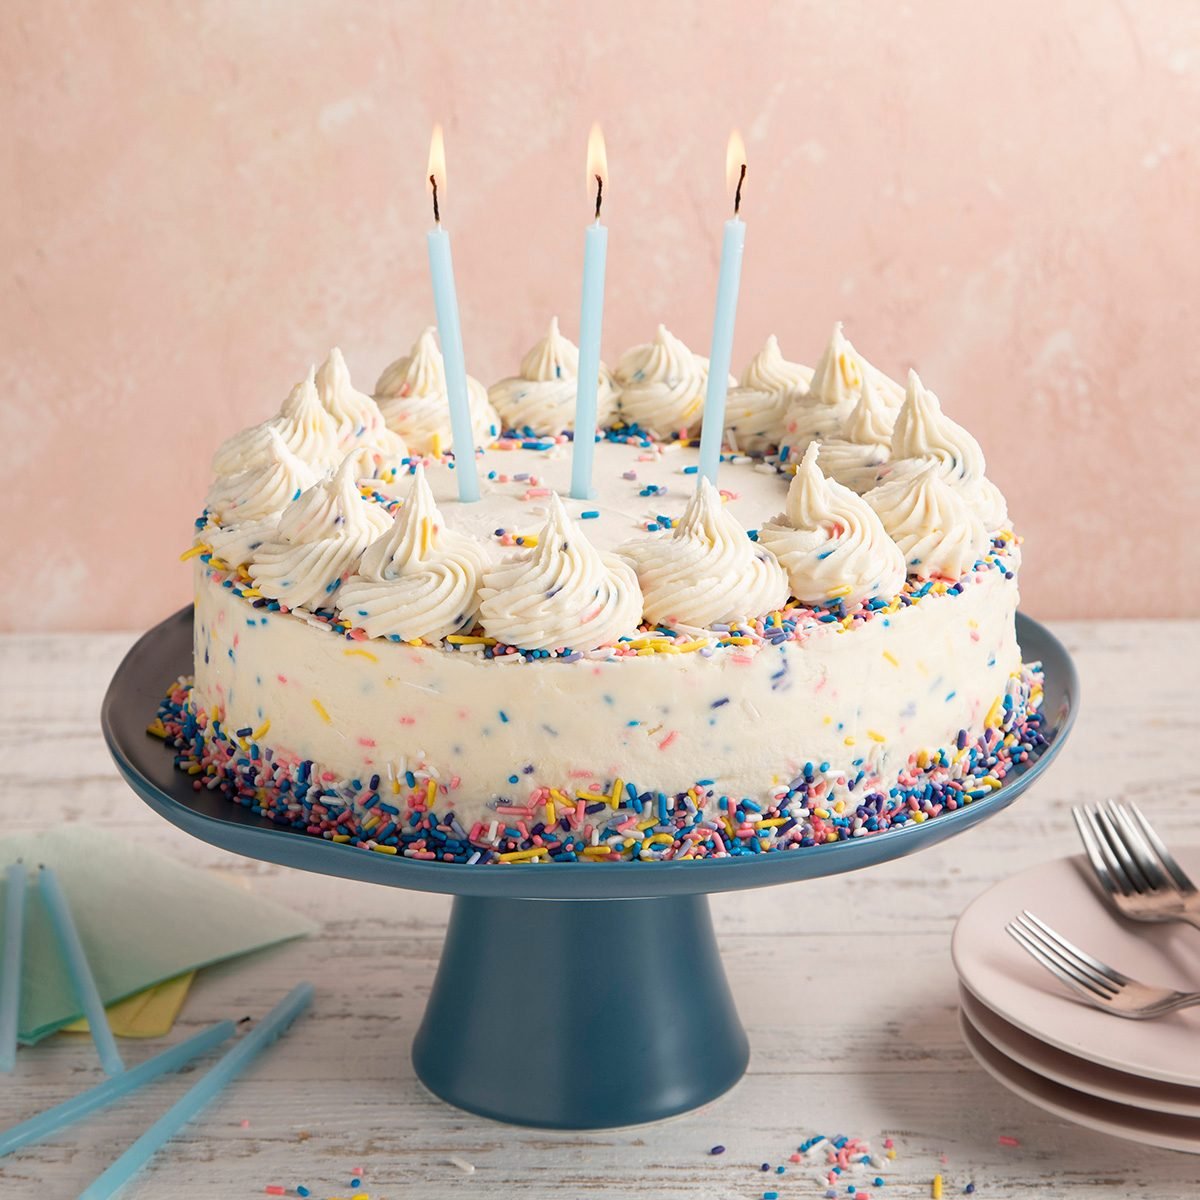 270,300+ Cake Slice Stock Photos, Pictures & Royalty-Free Images - iStock |  Cake, Birthday cake, Cupcake